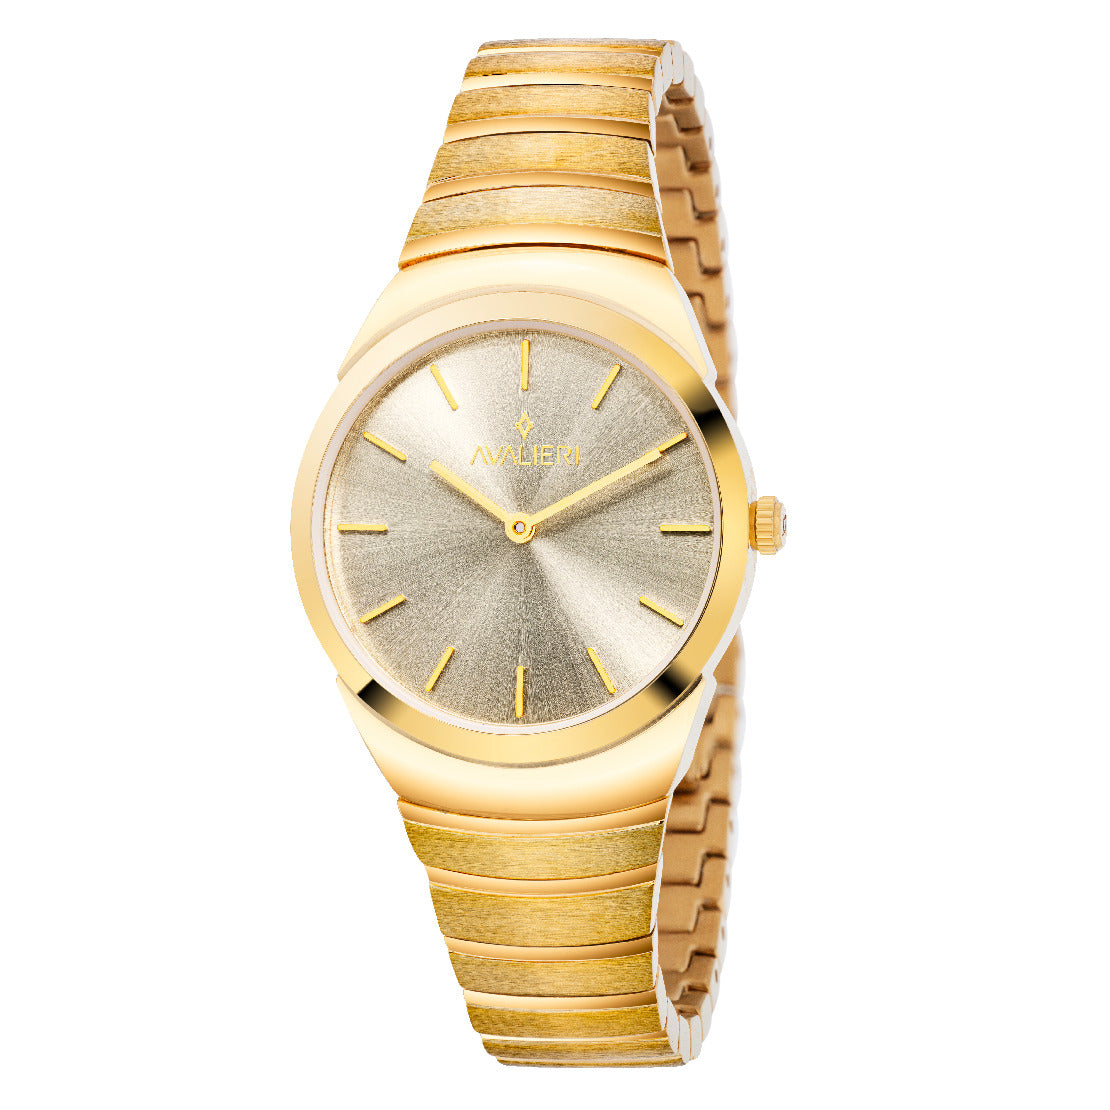 Avalieri Women's Quartz Watch Gold Dial - AV-2558B